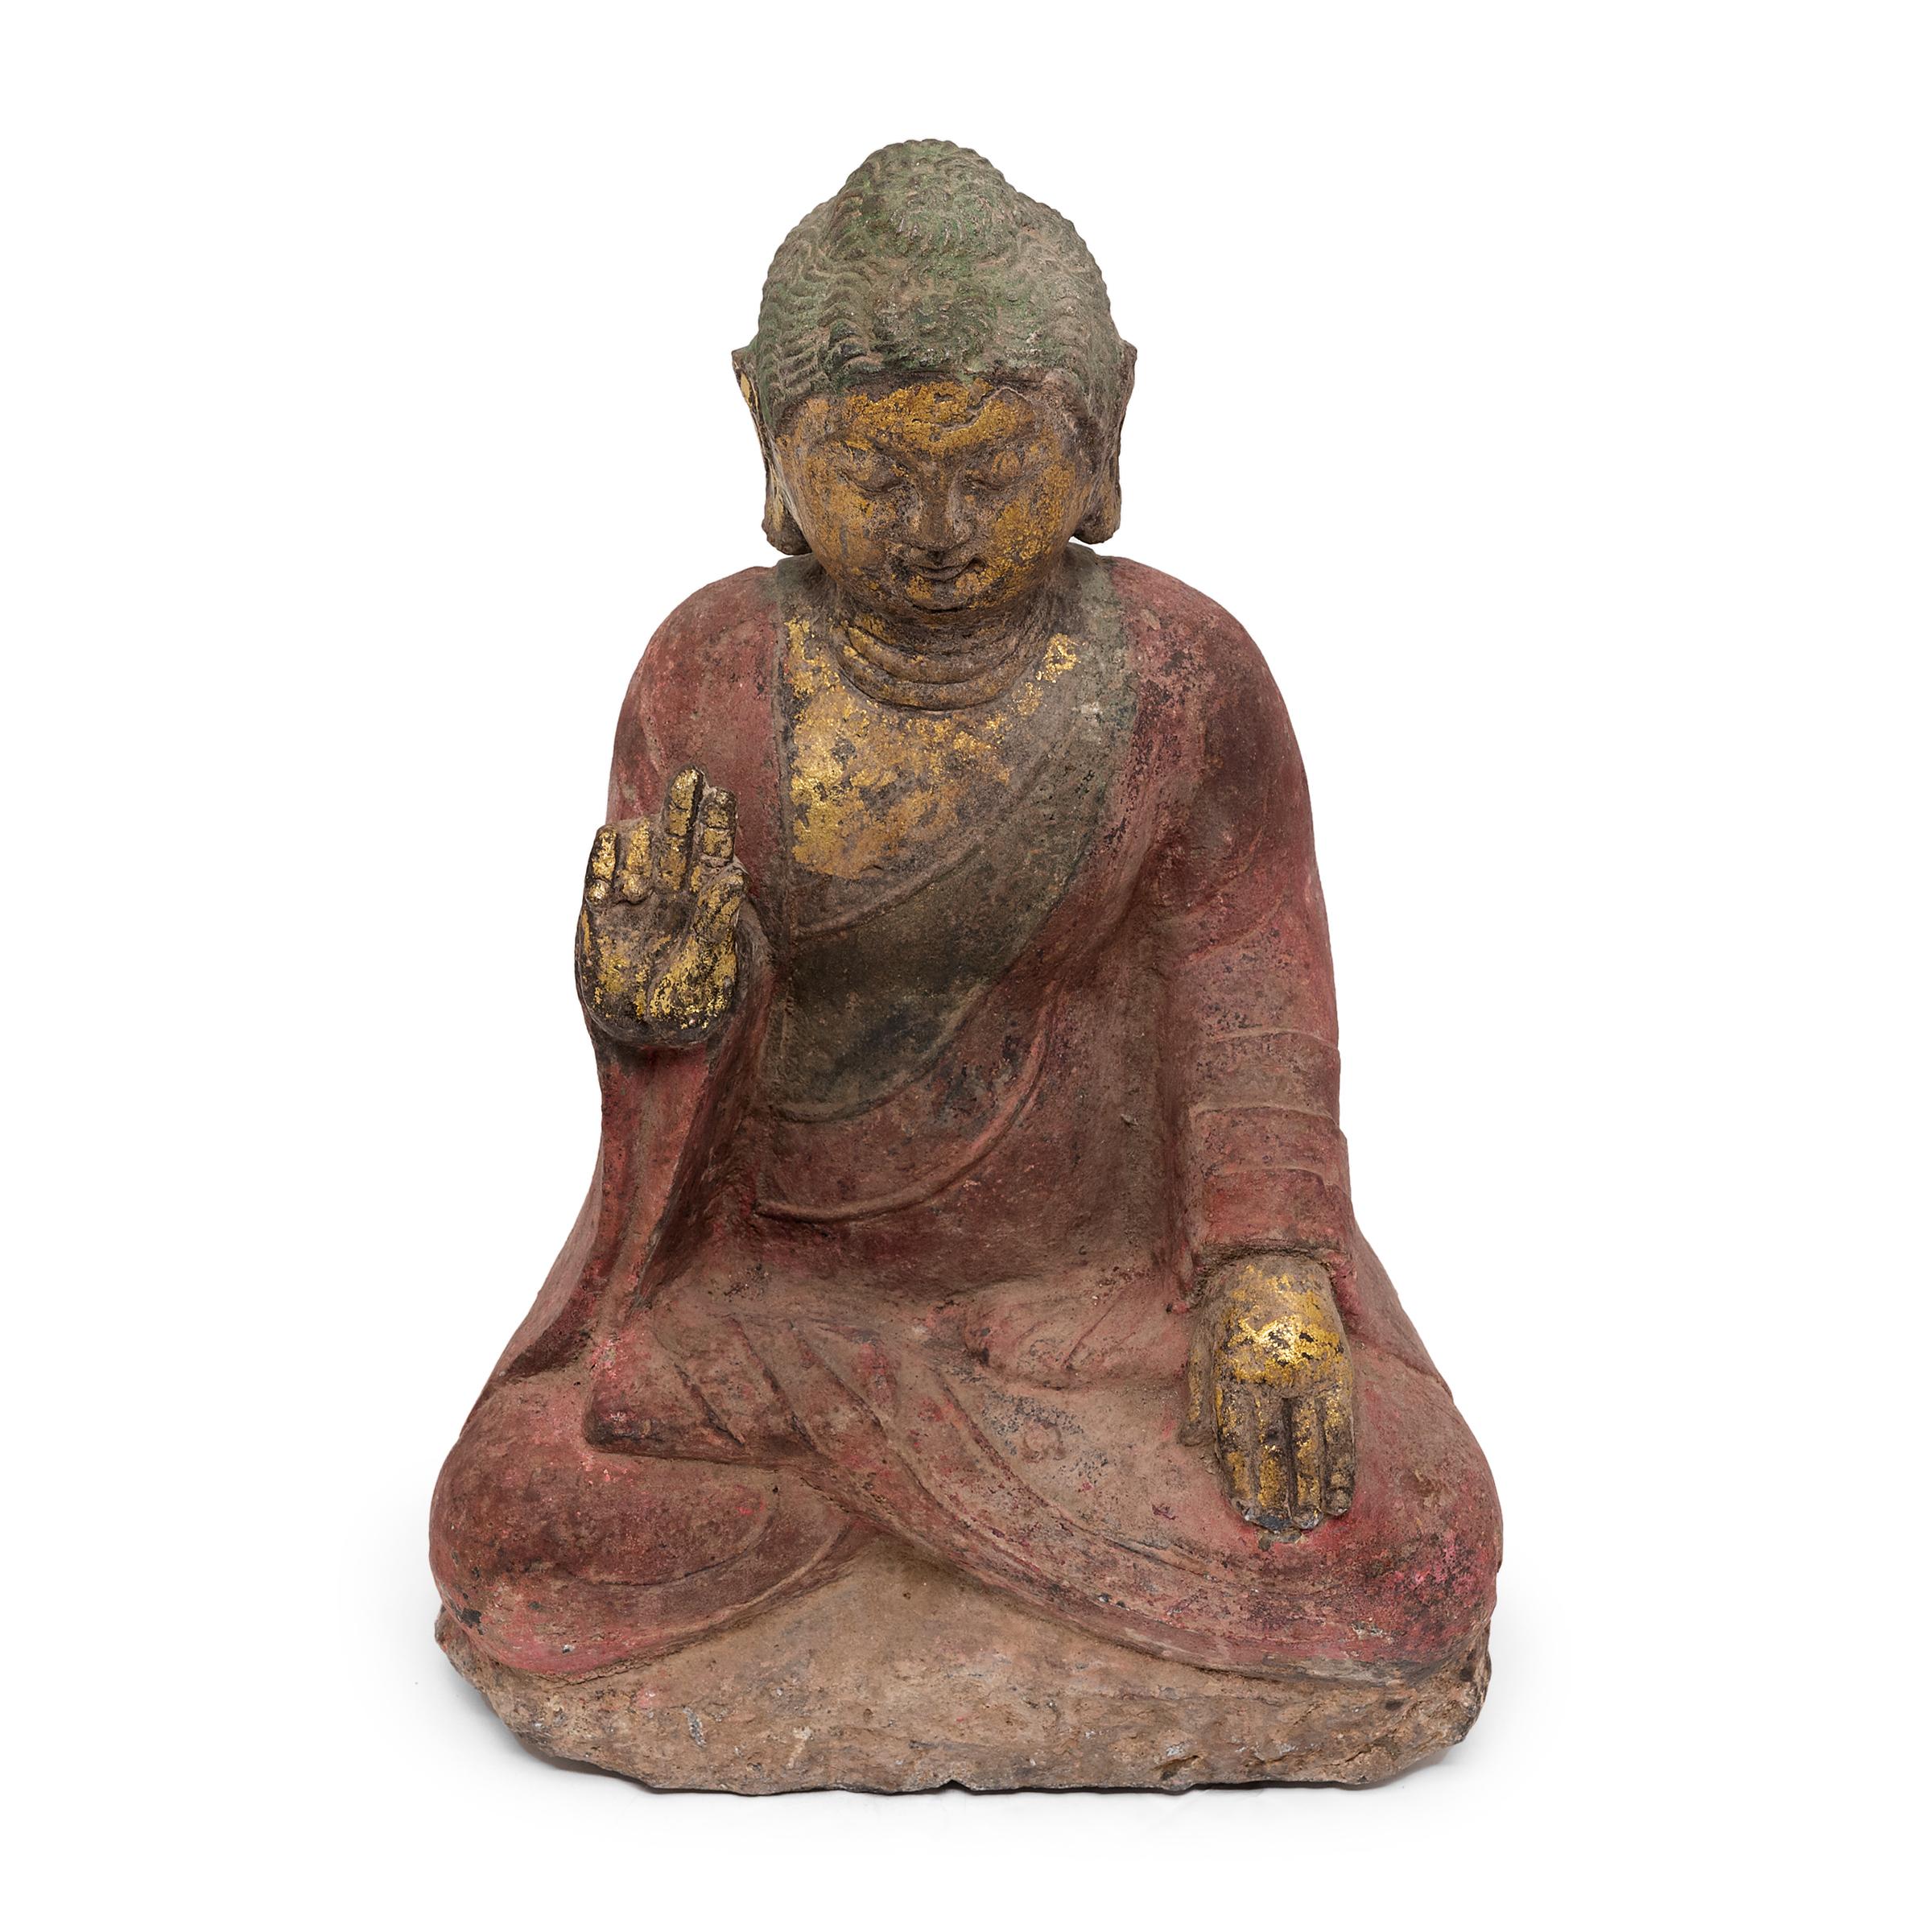 Hand-Carved Chinese Polychrome Stone Seated Buddha, c. 1900